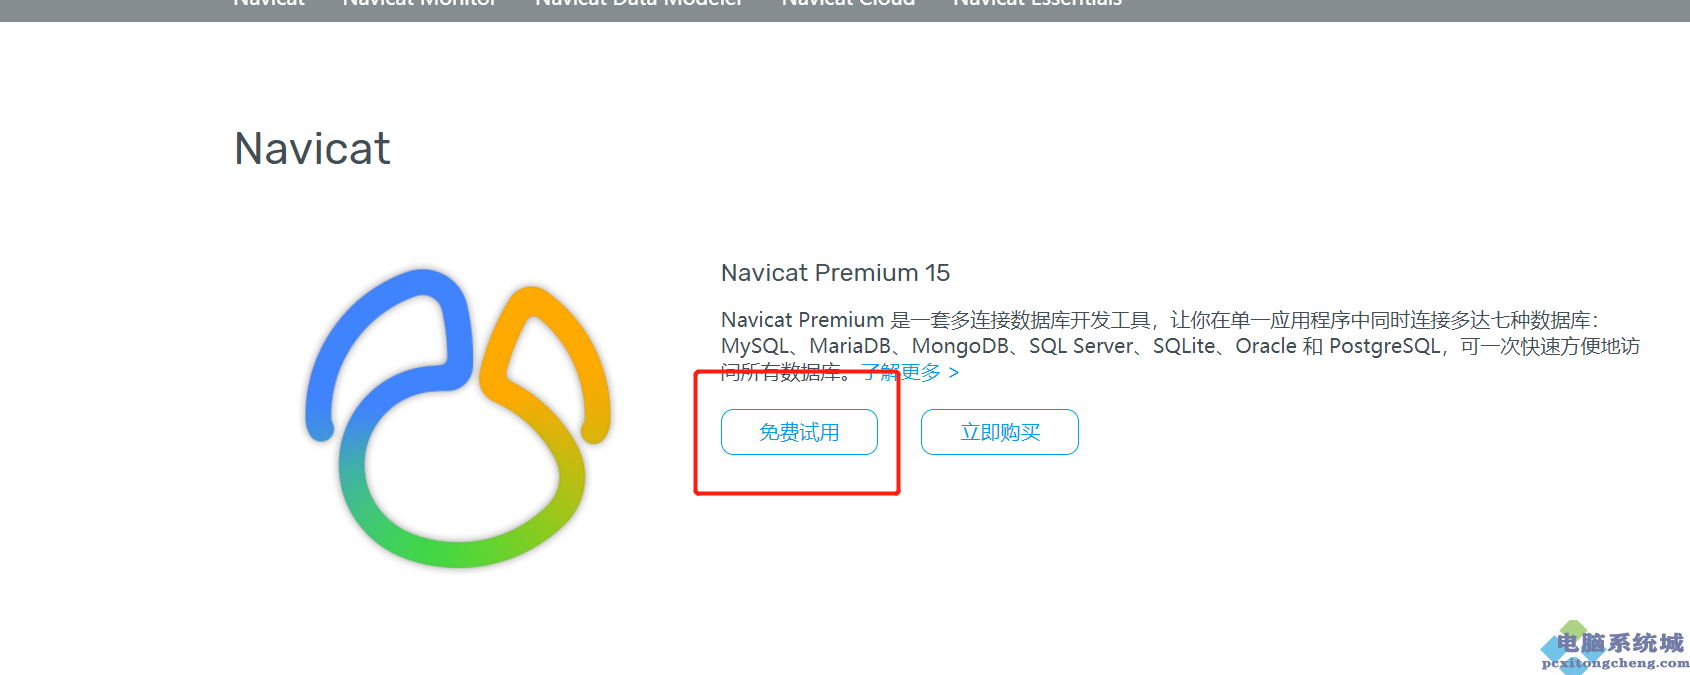 navicat破解教程pdf(navicat premium 破解教程)